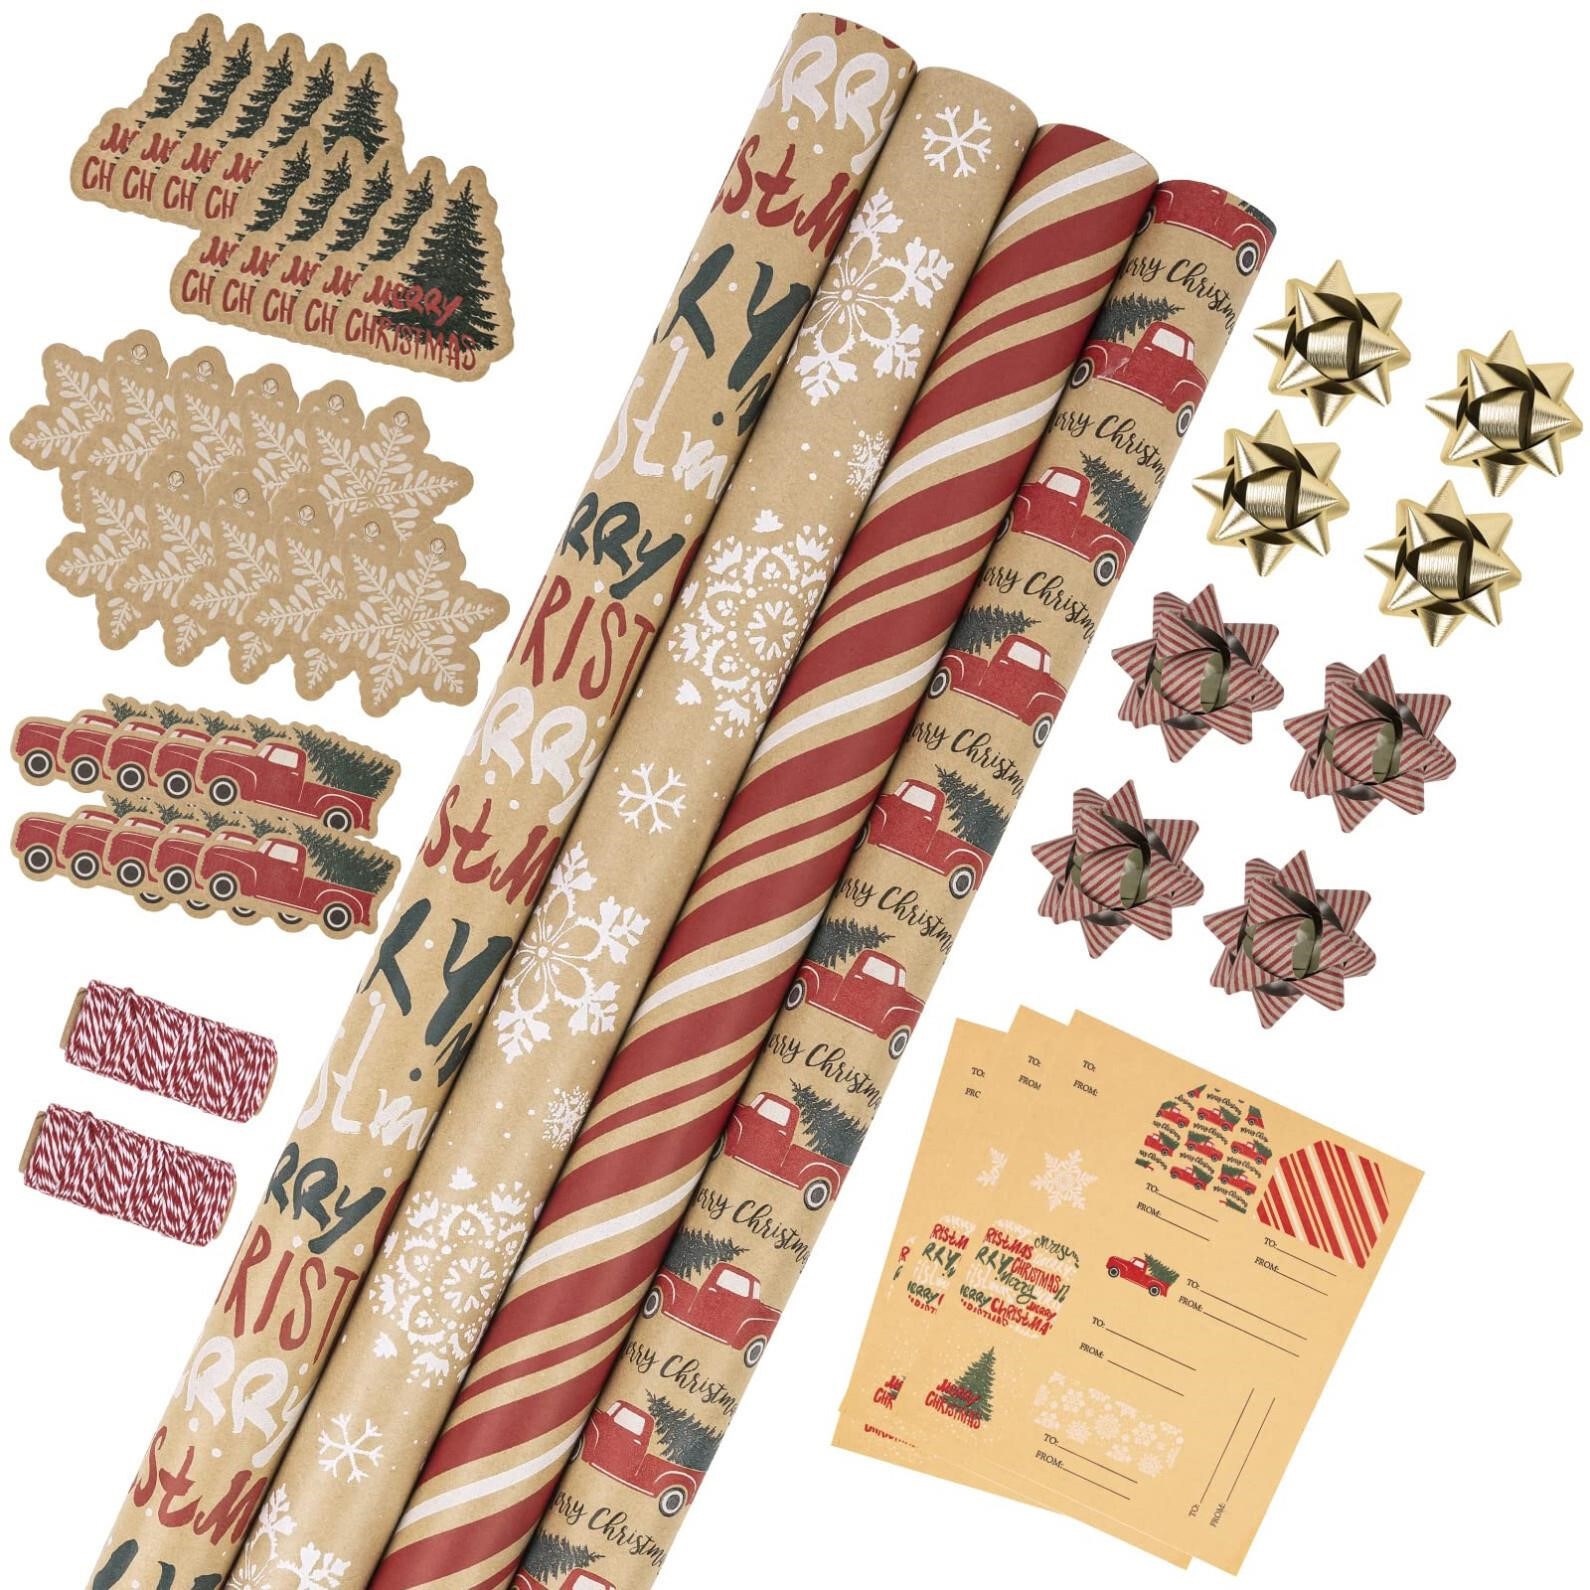 RUSPEPA Christmas Wrapping Paper Set - 4 Rolls of